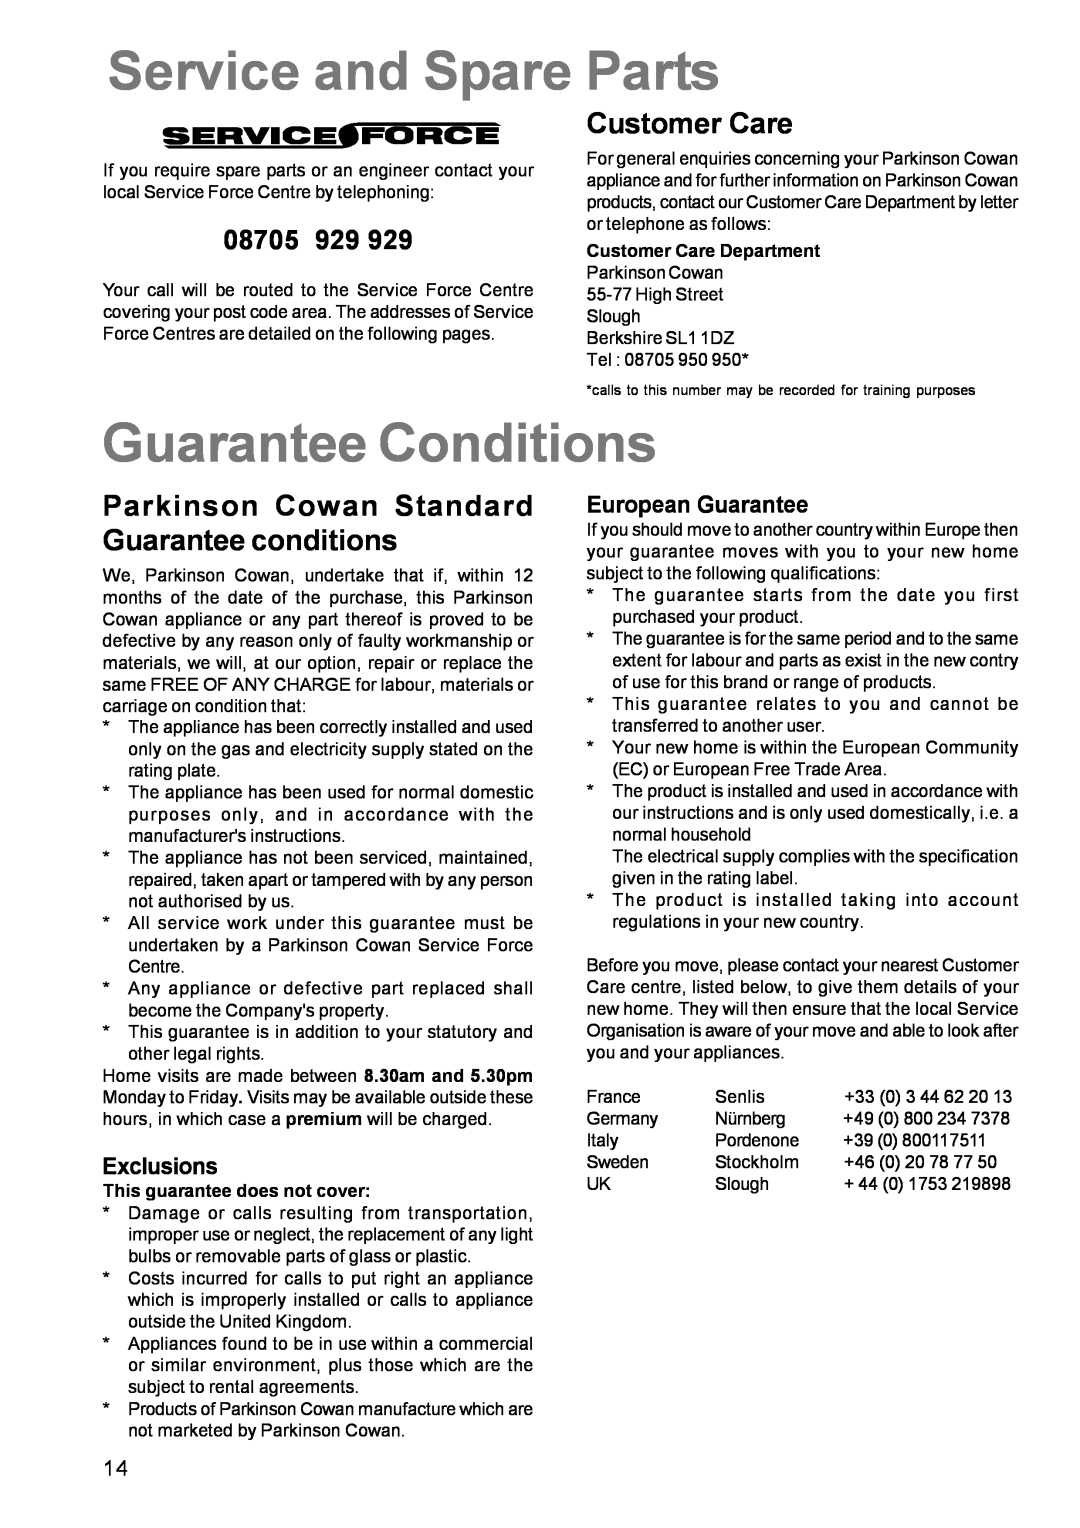 Parkinson Cowan CSIM 509 manual Service and Spare Parts, Guarantee Conditions, Customer Care, 08705, Exclusions 